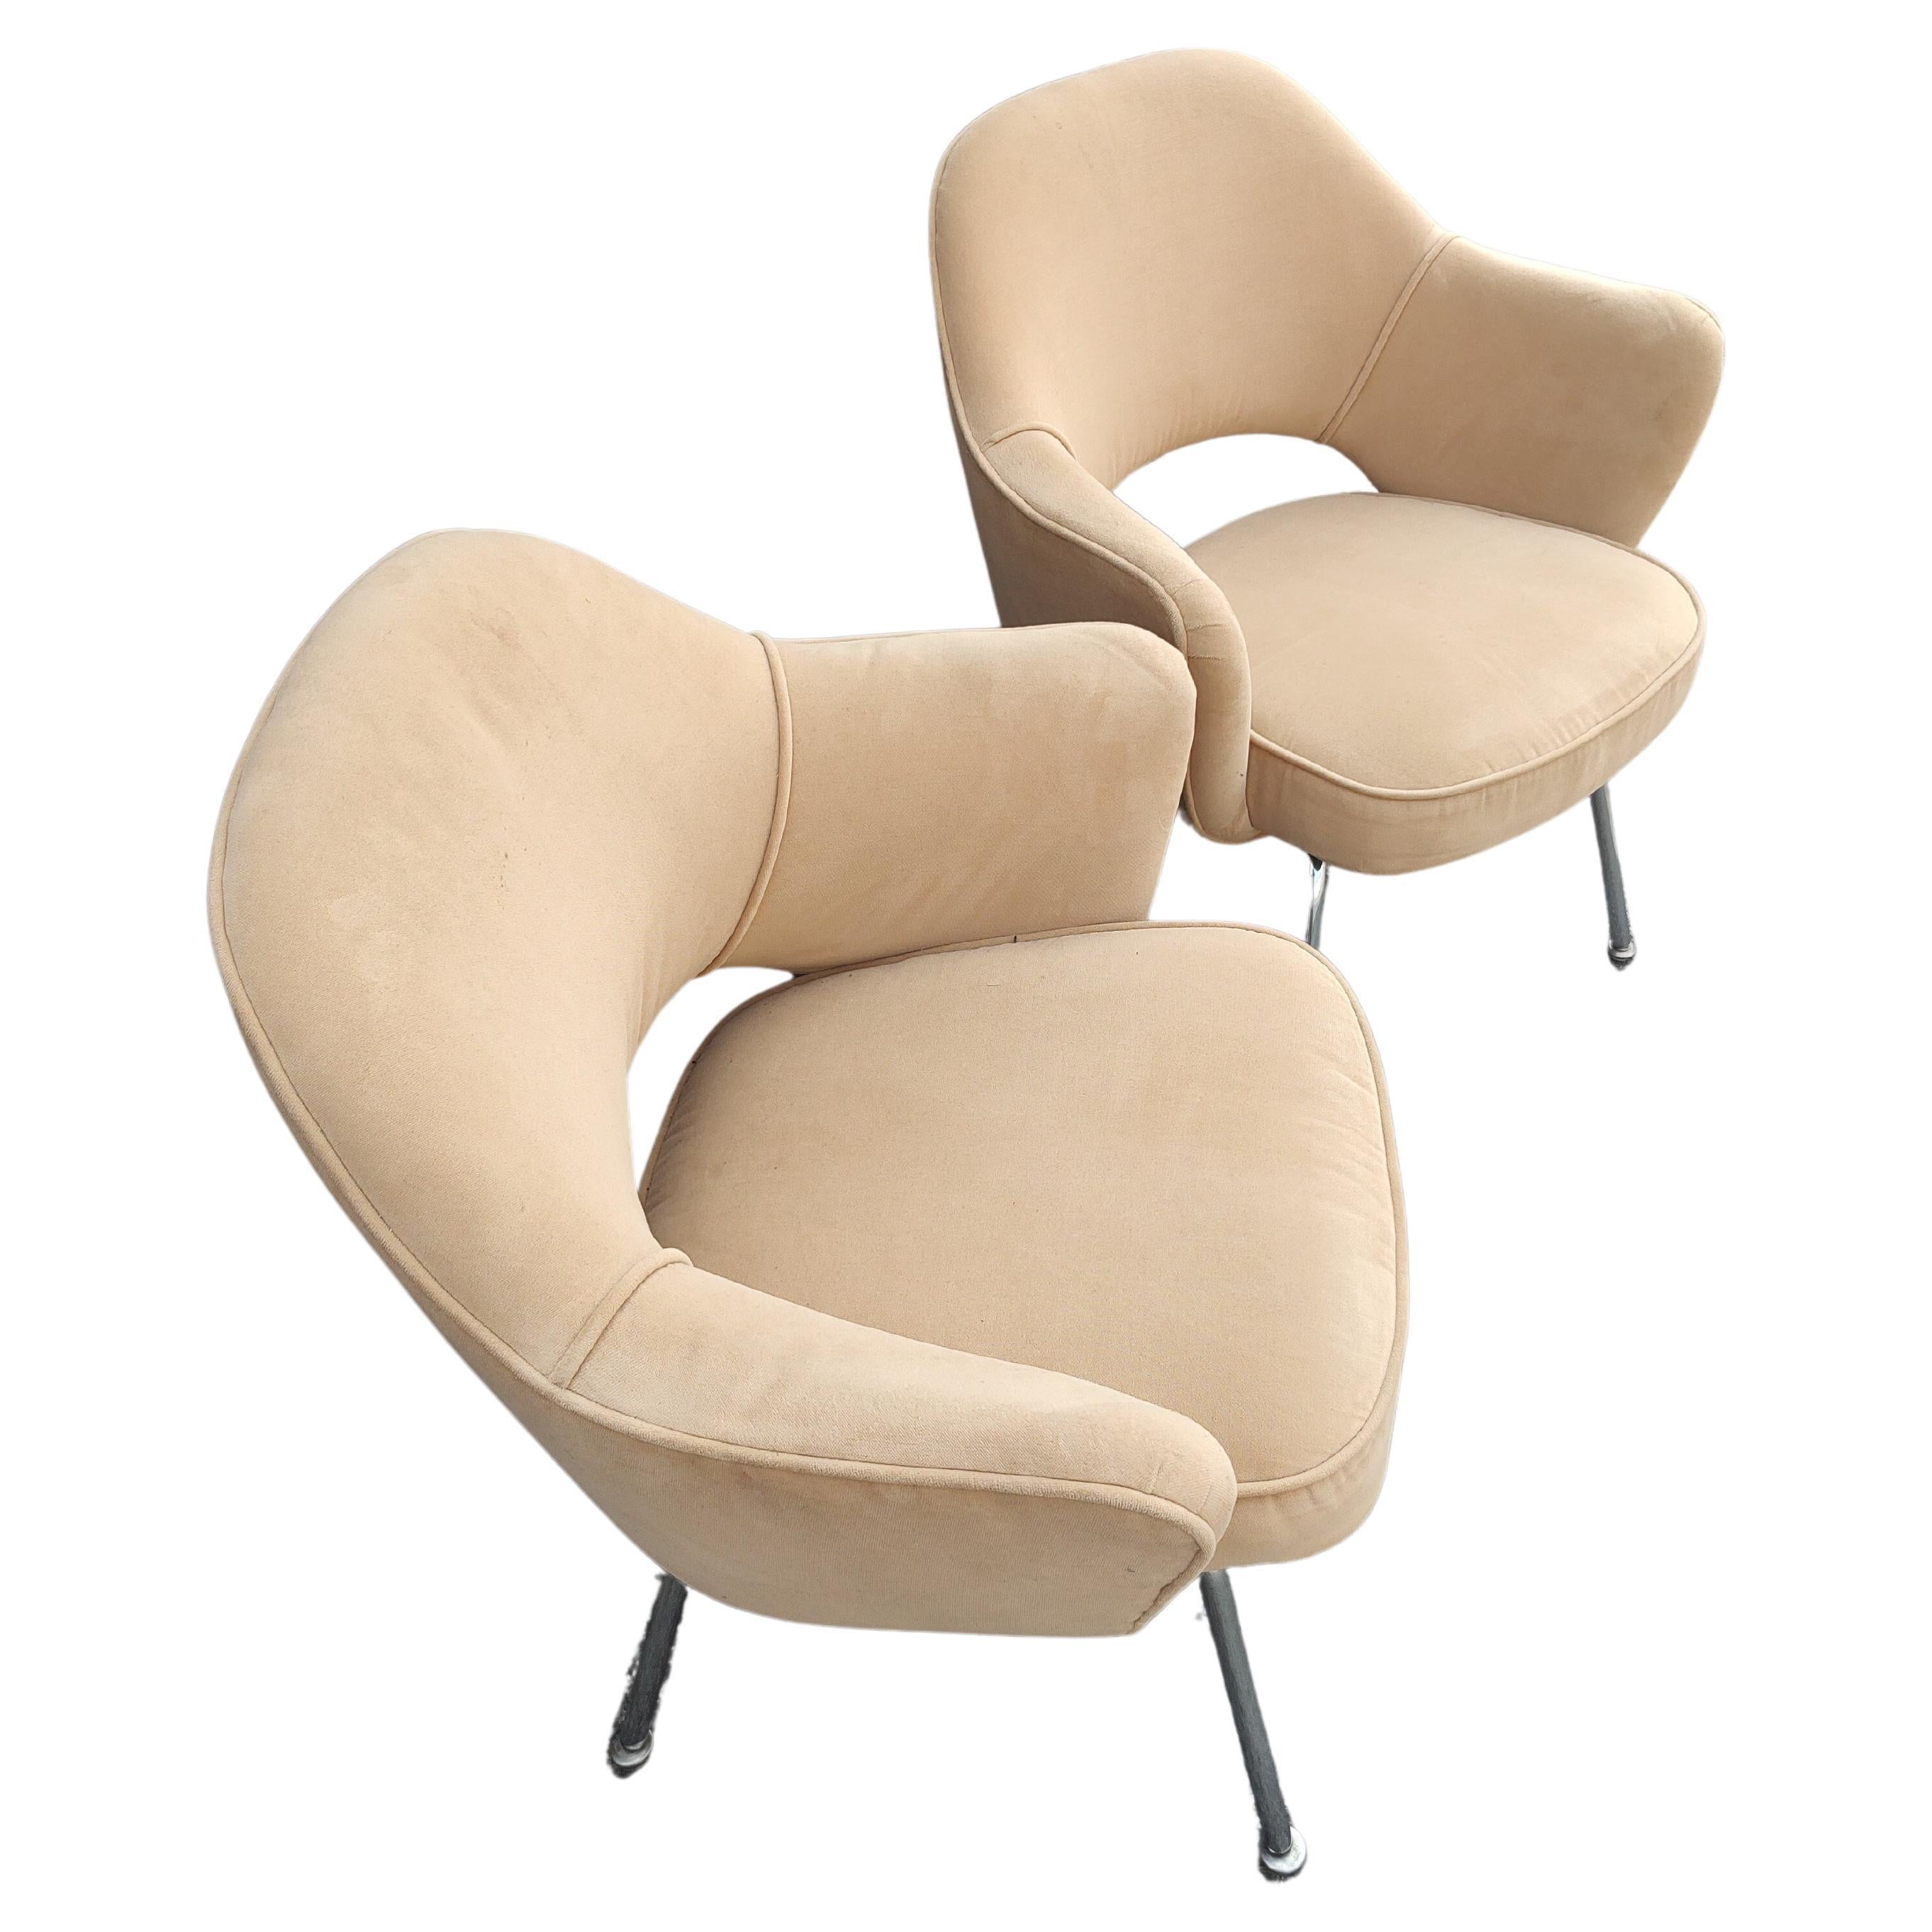 Pair of Mid-Century Modern Executive Armchairs by Eero Saarinen for Knoll, C1965